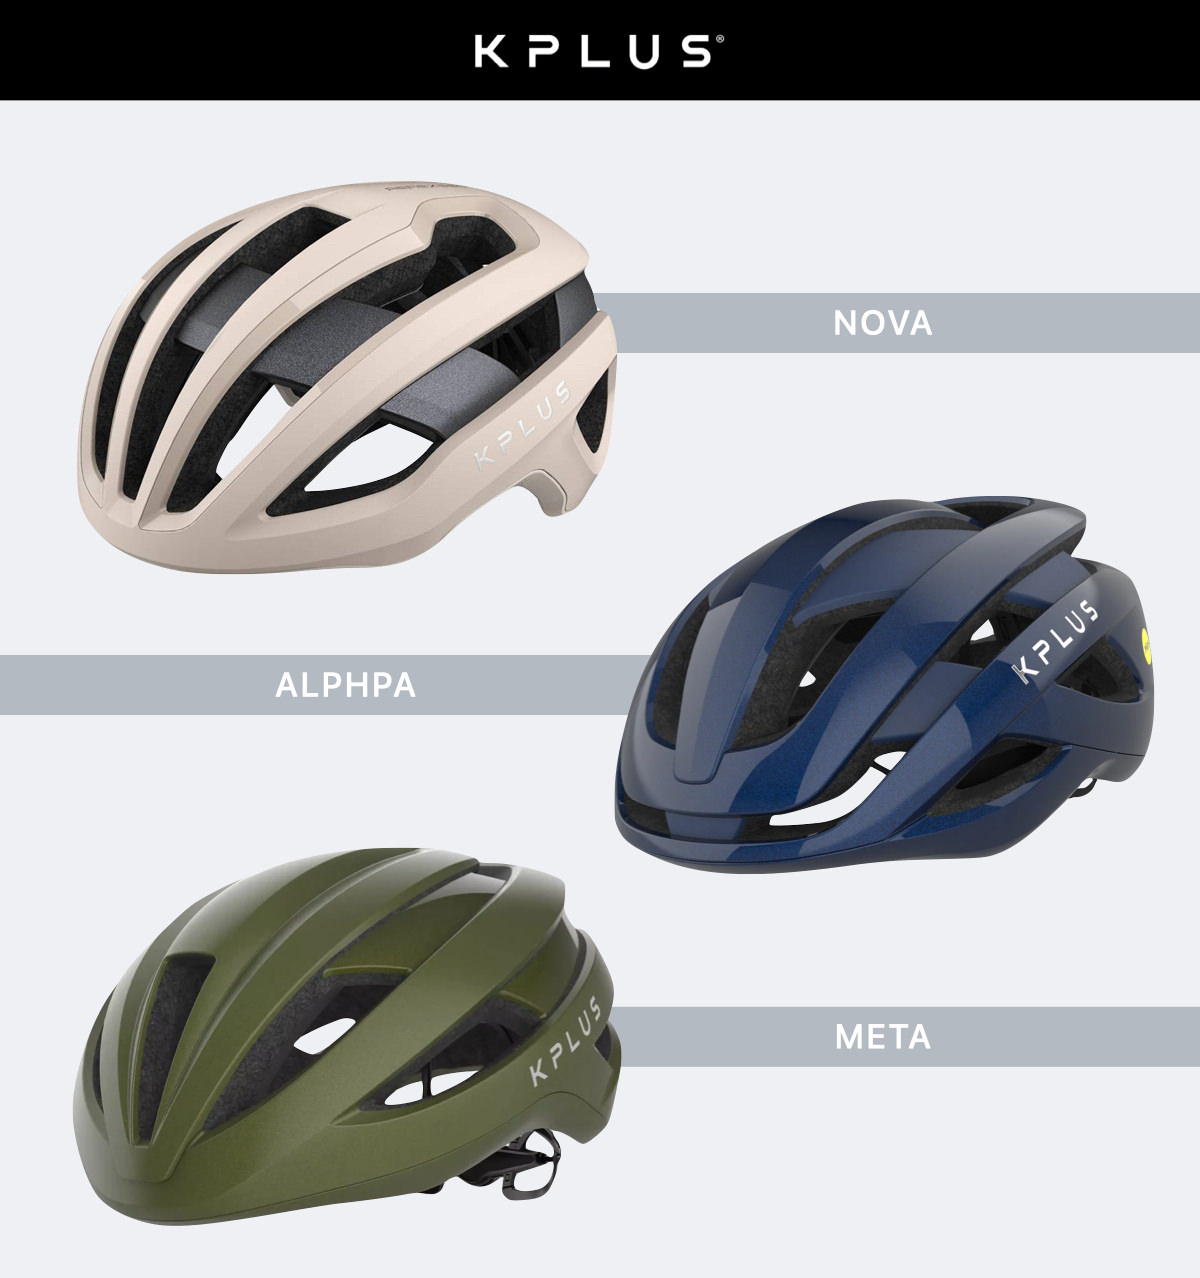 Kplusヘルメット主要モデル